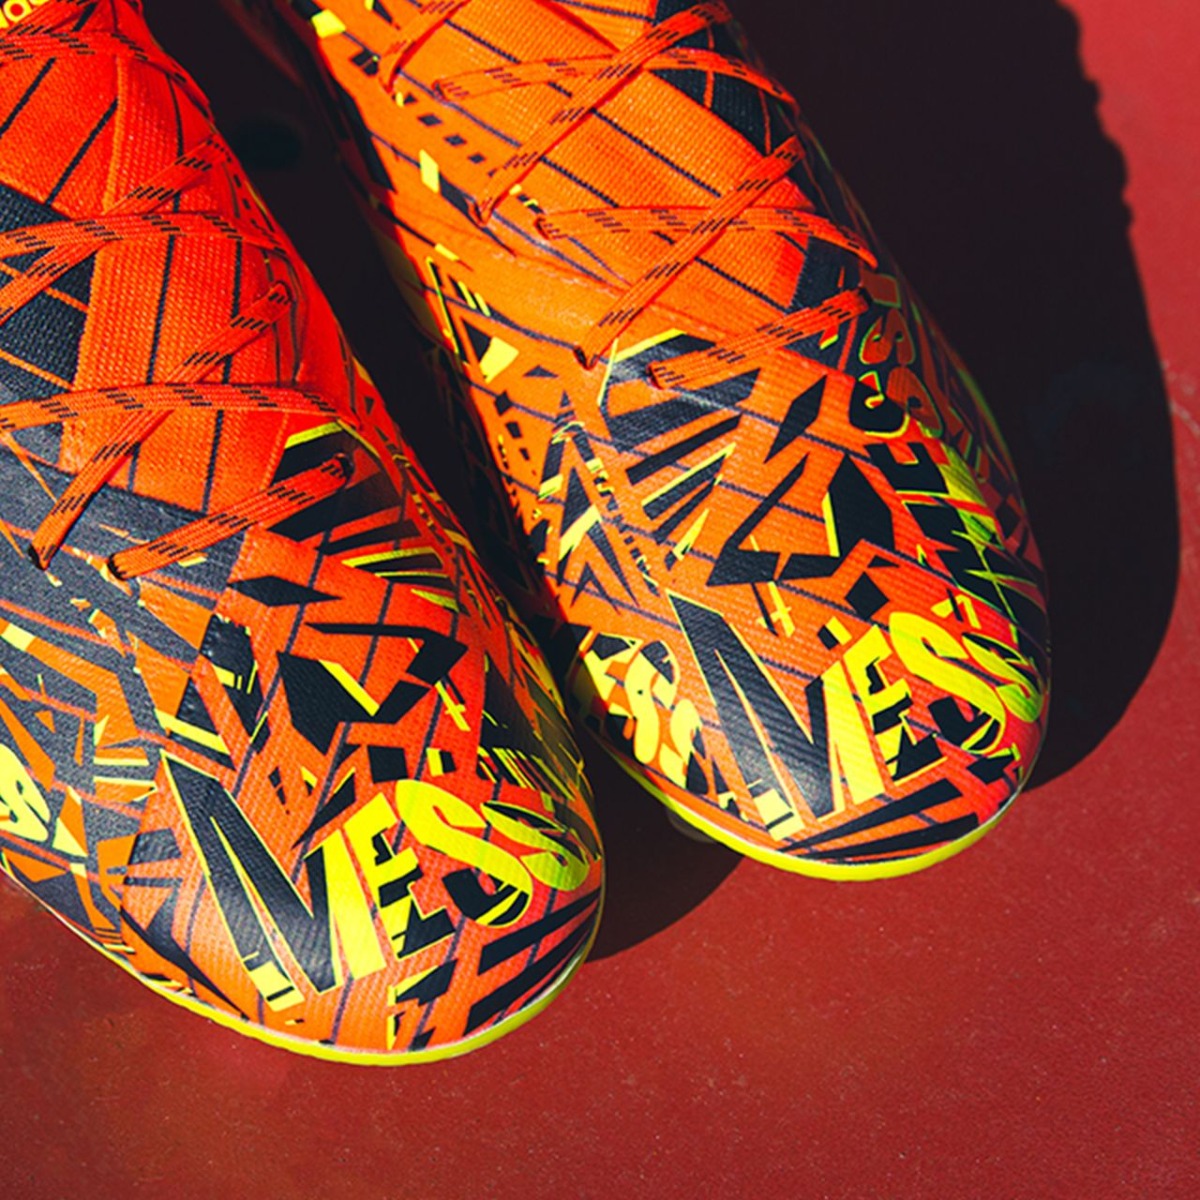 Rey-Del-Balon-adidas-Launch-Nemeziz-Messi-Slider-tekst-blokjes-640x640px-5_2x.jpg